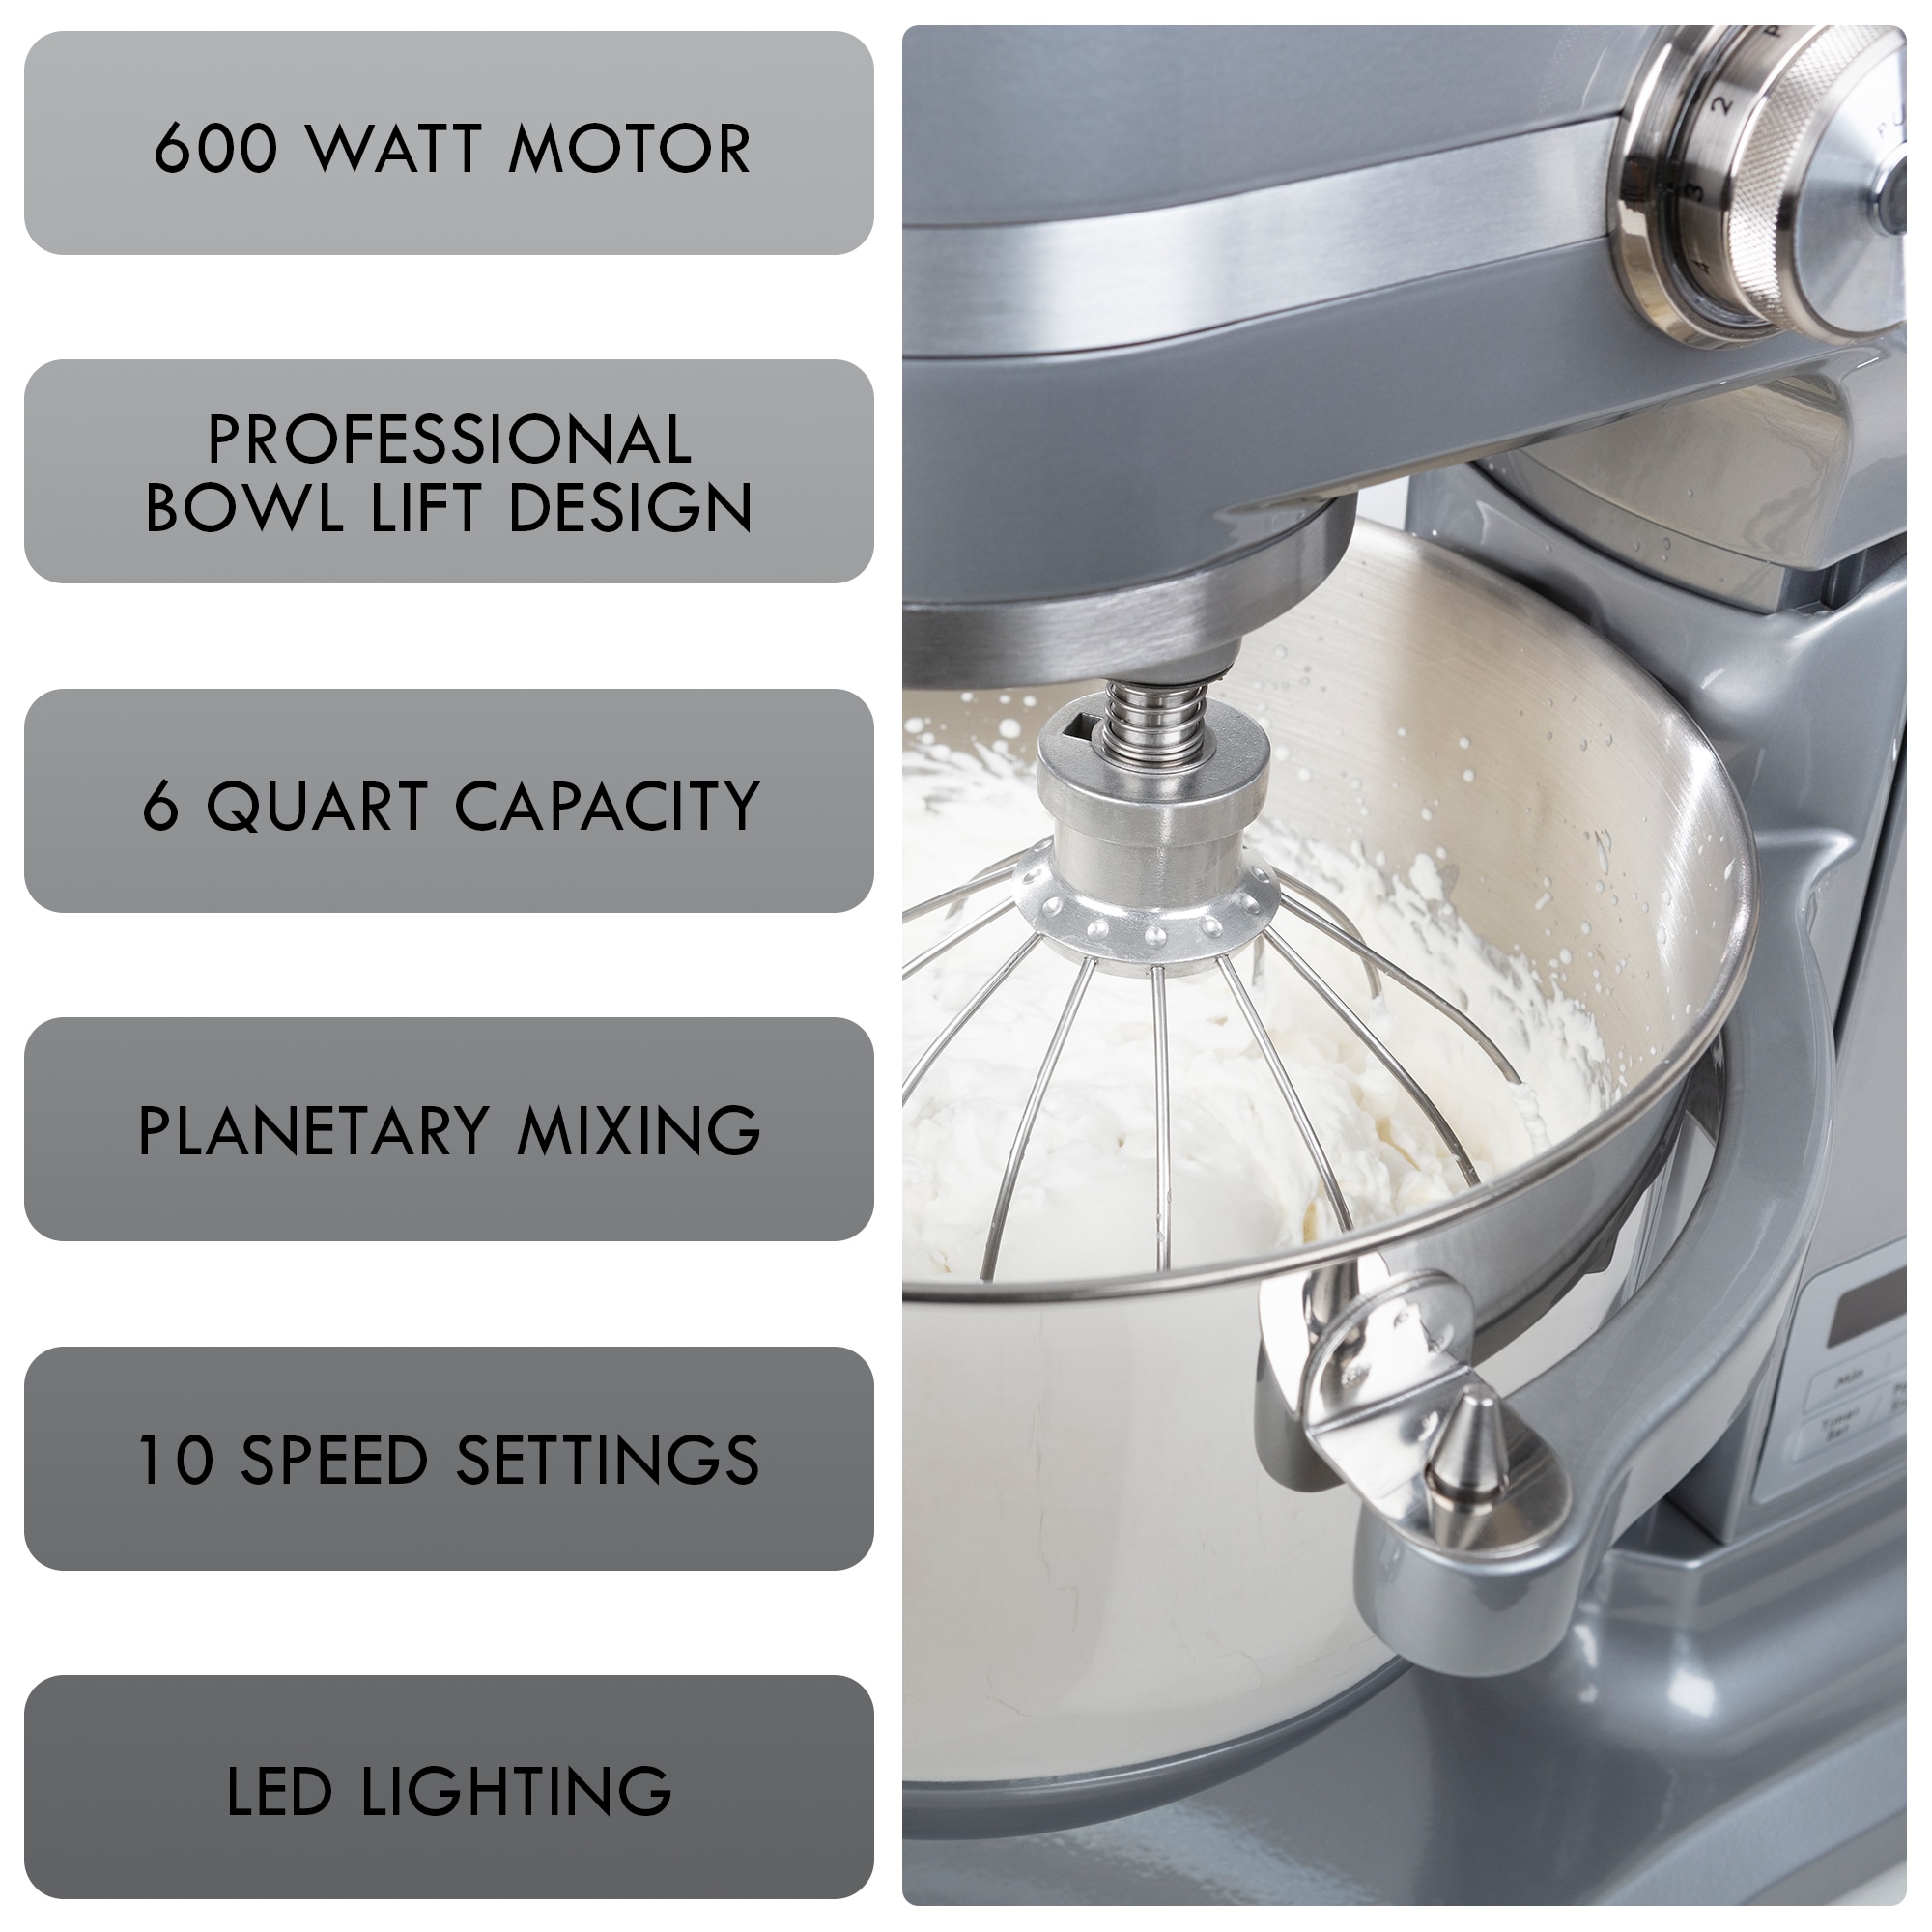 KitchenAid 6 Quart Bowl-Lift Stand Mixer Contour Silver